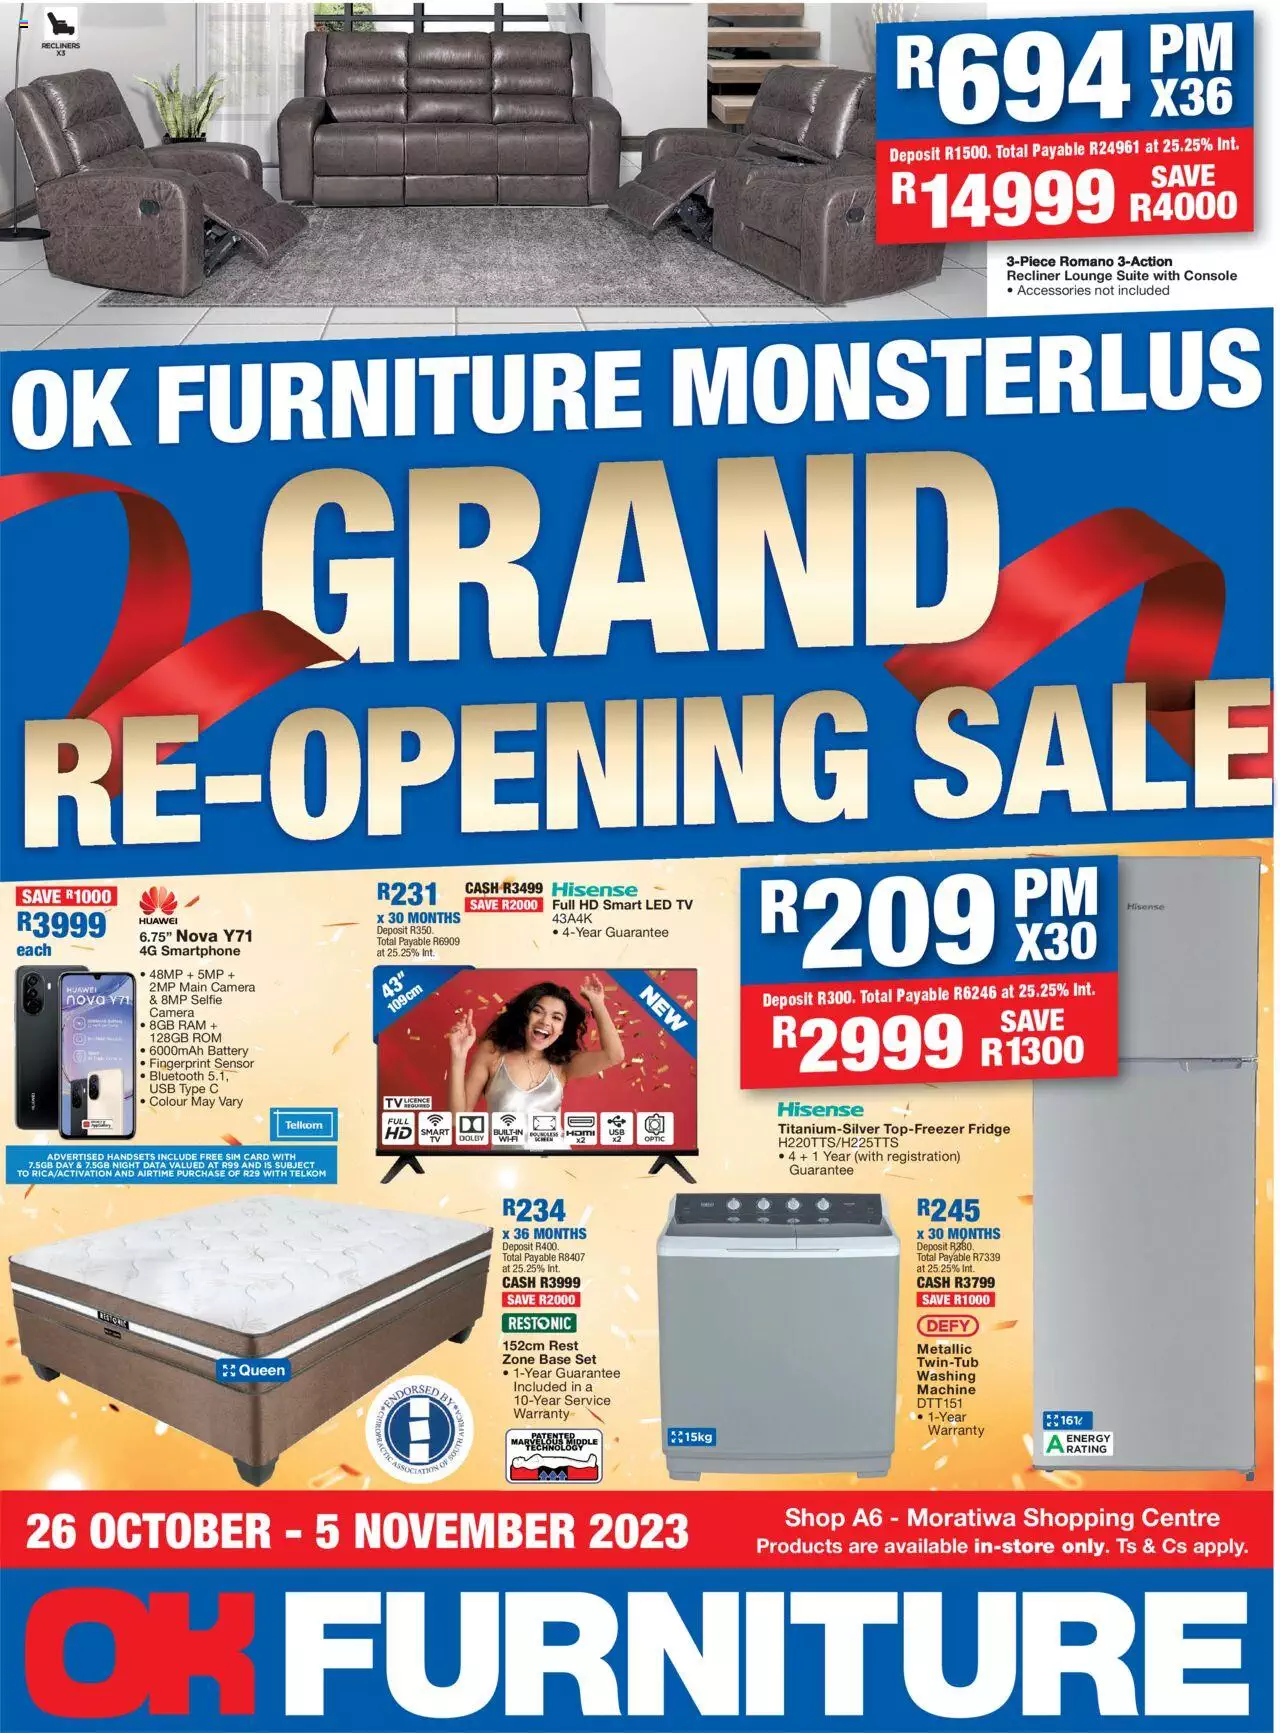 OK Furniture Grand Re-Opening Sale 26 Oct – 5 Nov 2023